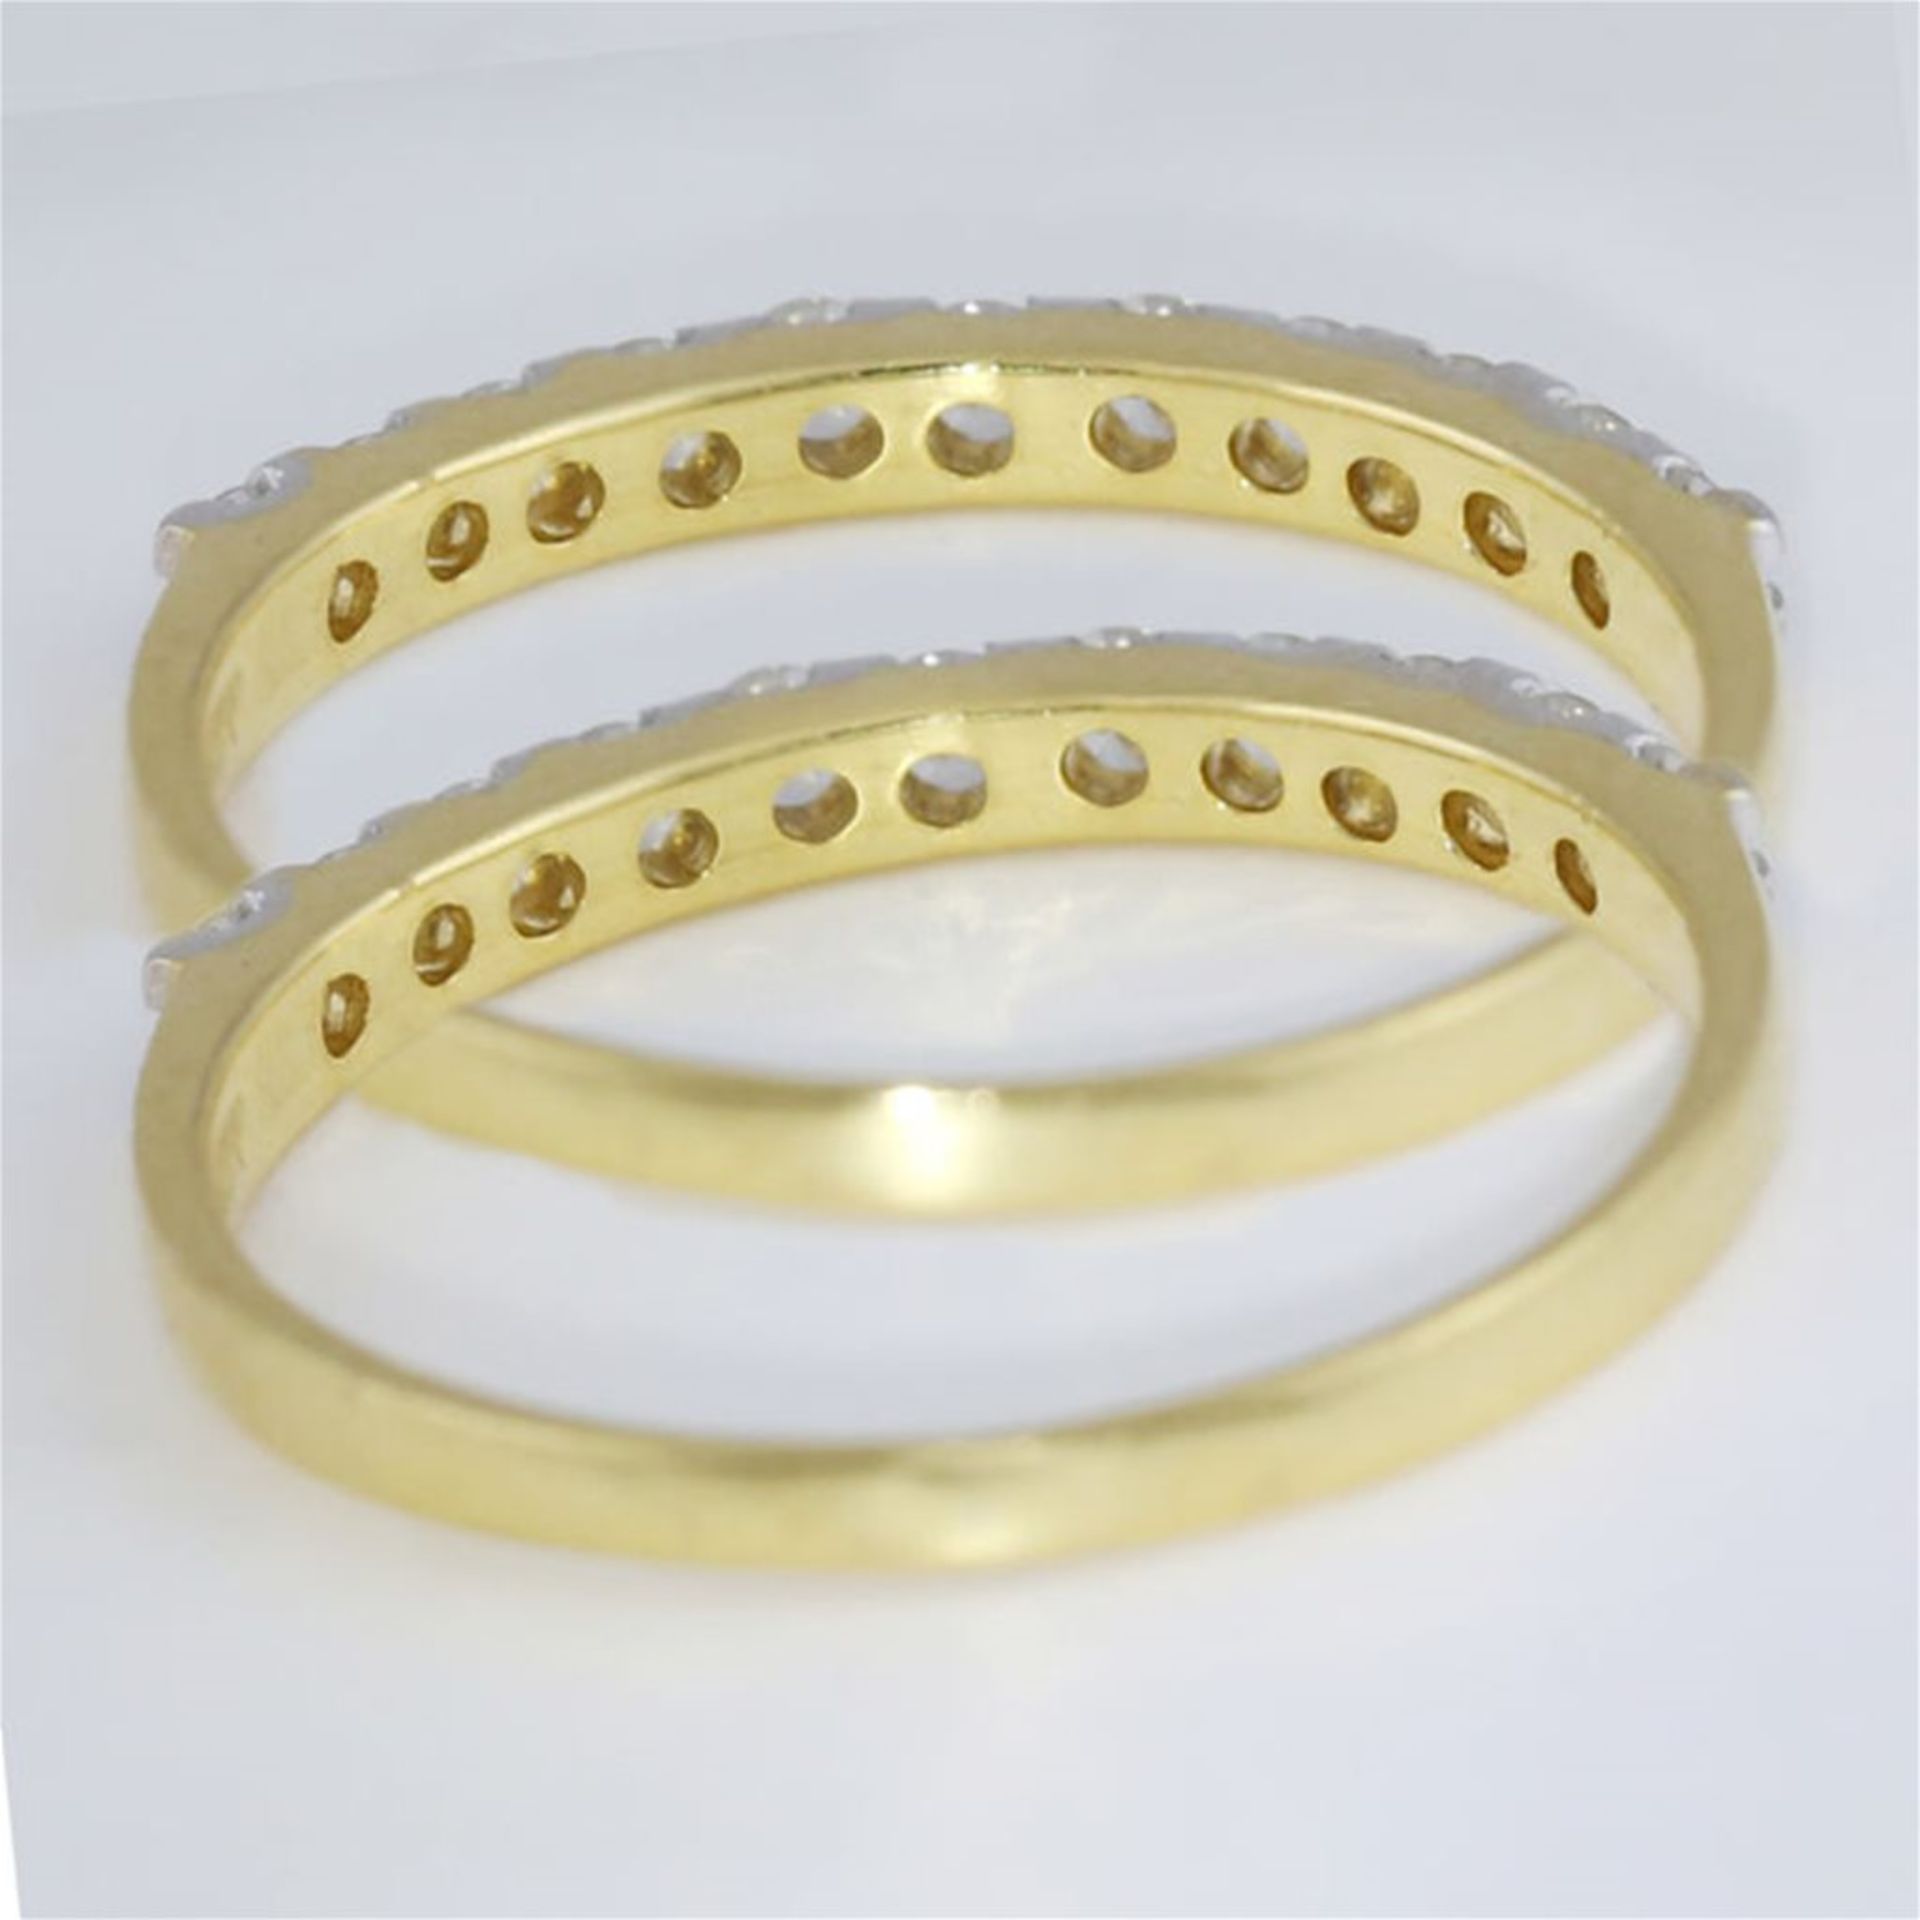 14 K / 585 Yellow Gold - Set of 4 Diamond Band Rings - Image 3 of 4